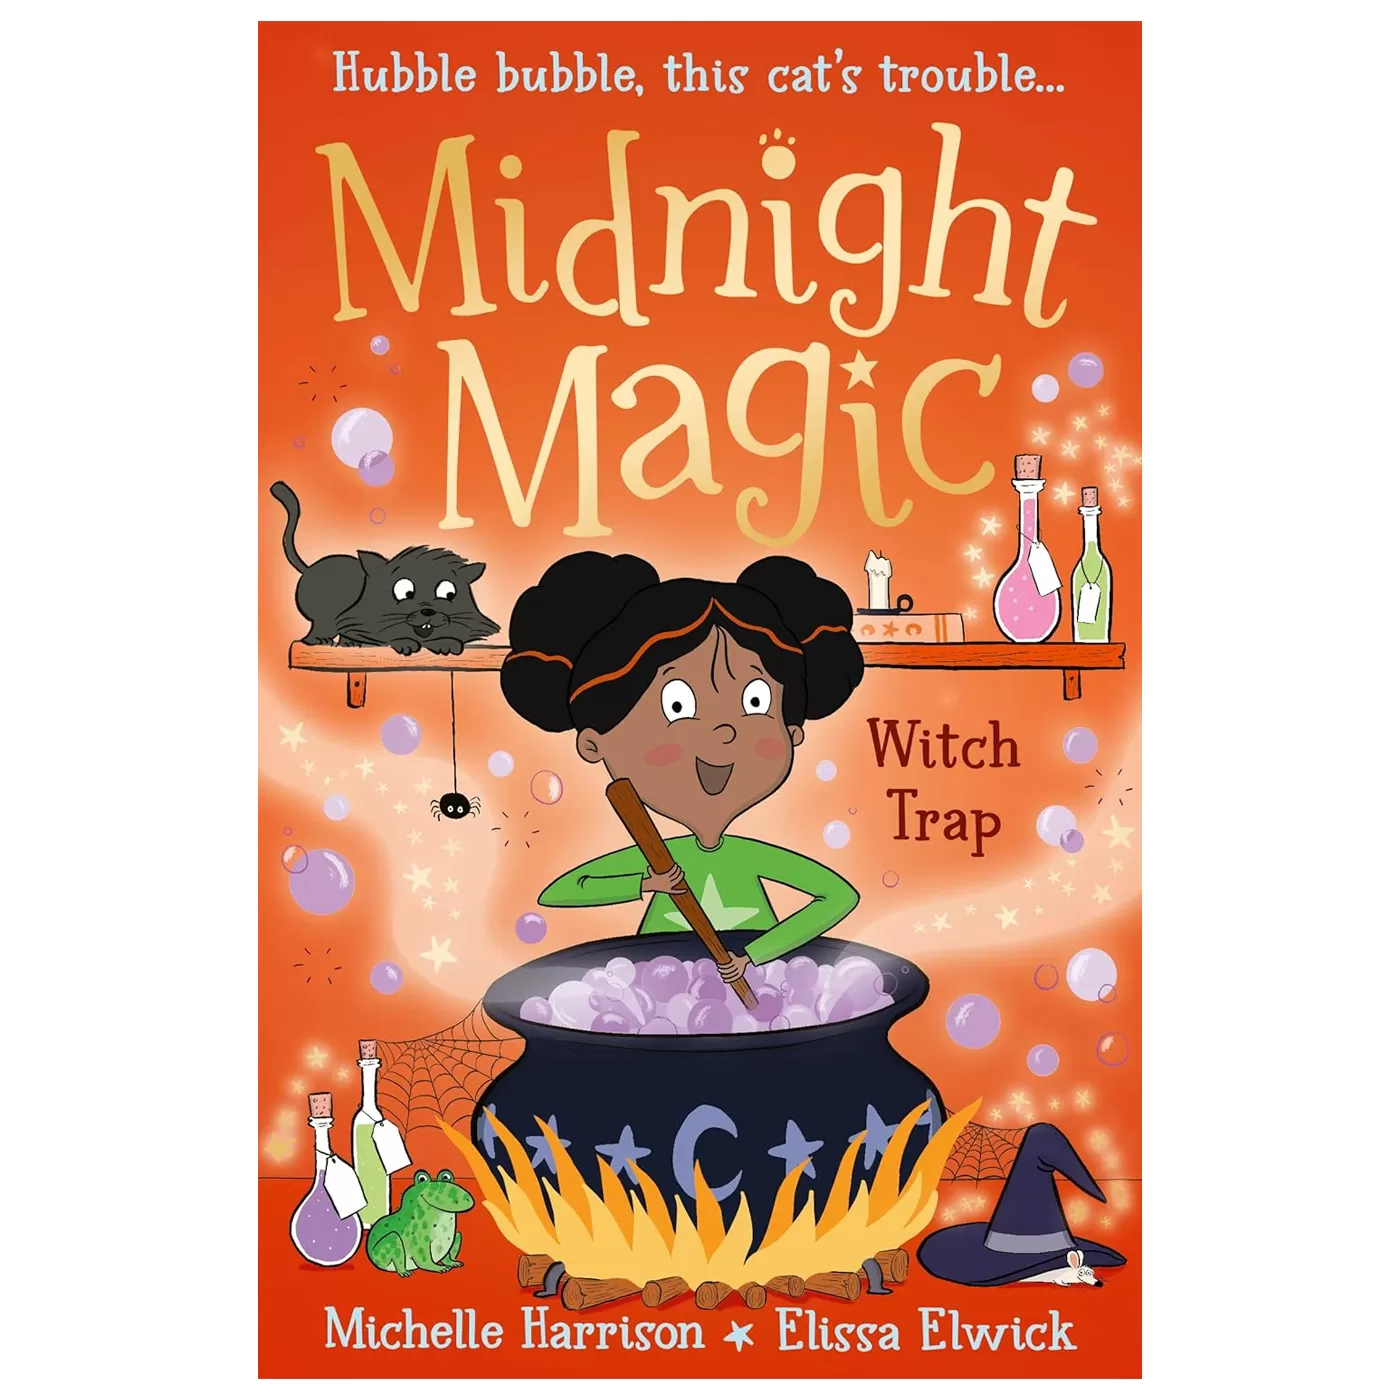  Midnight Magic: Witch Trap